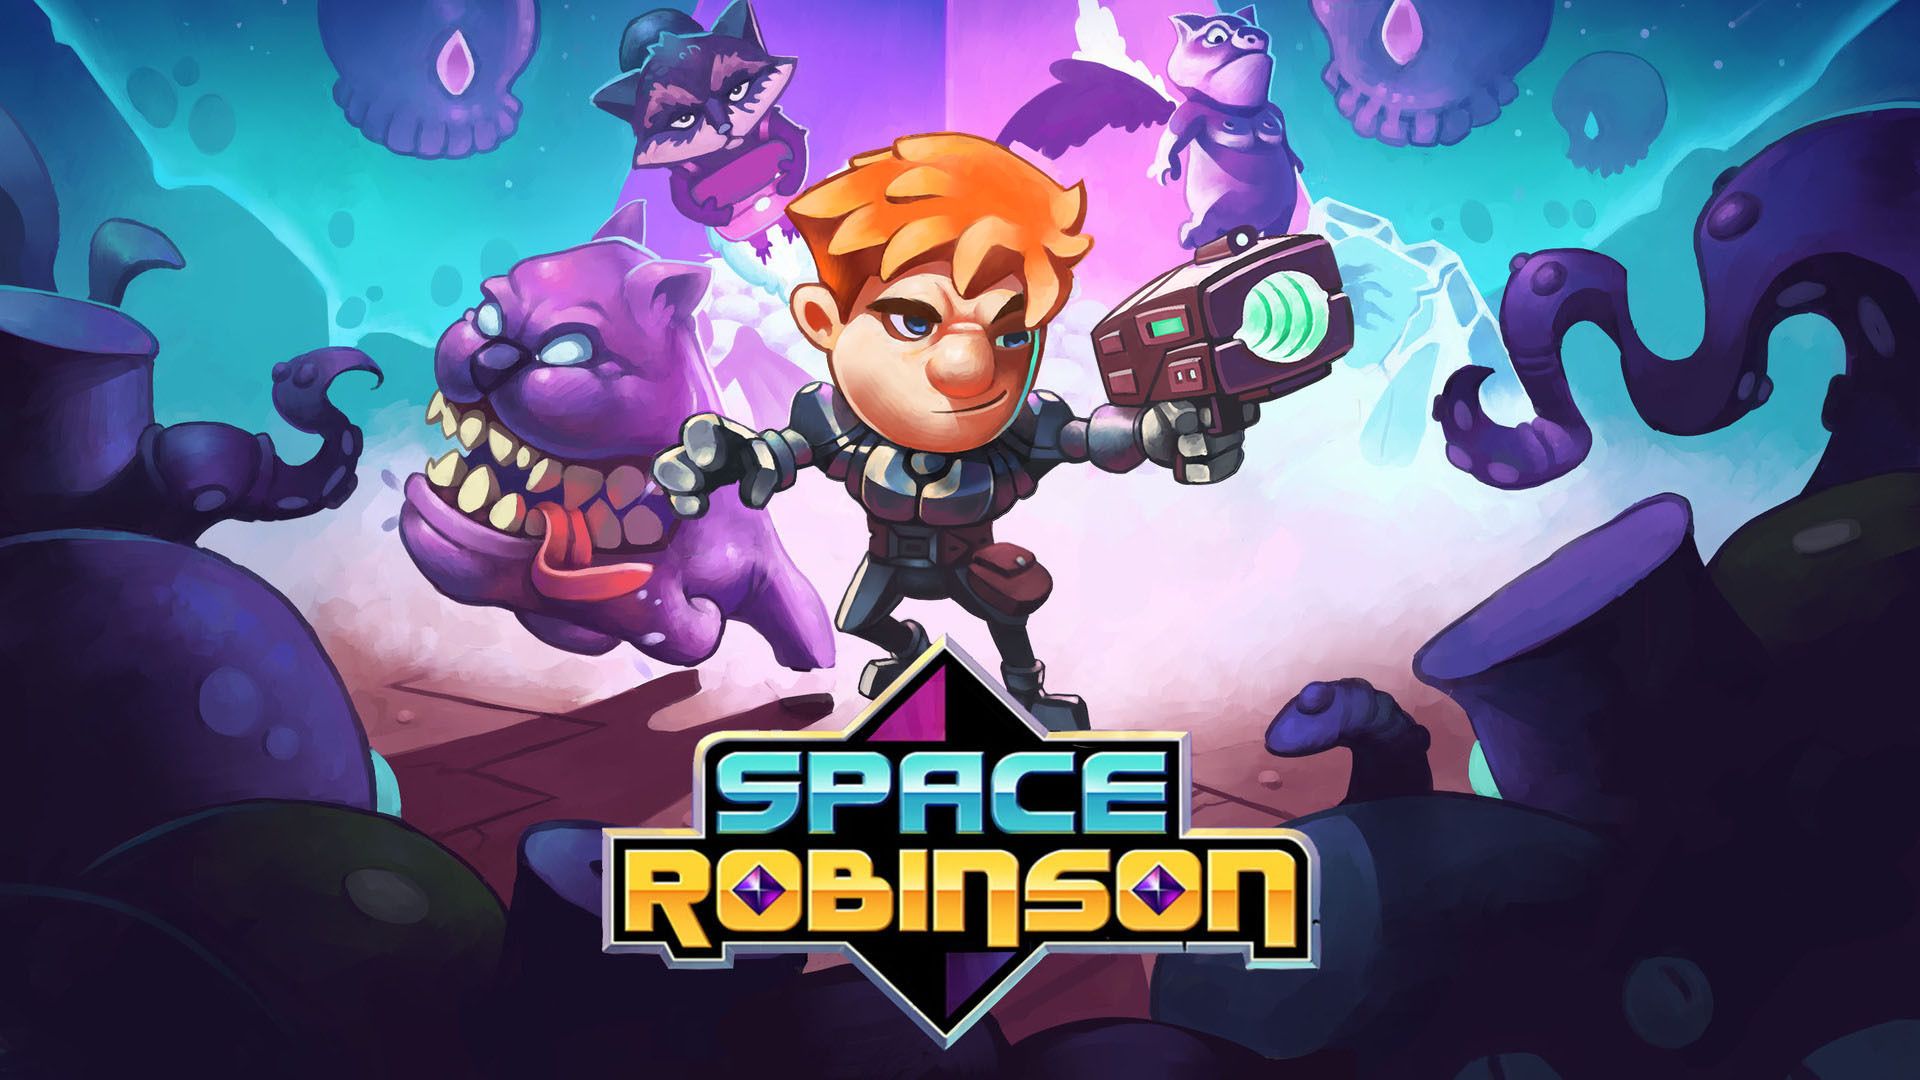 Space Robinson